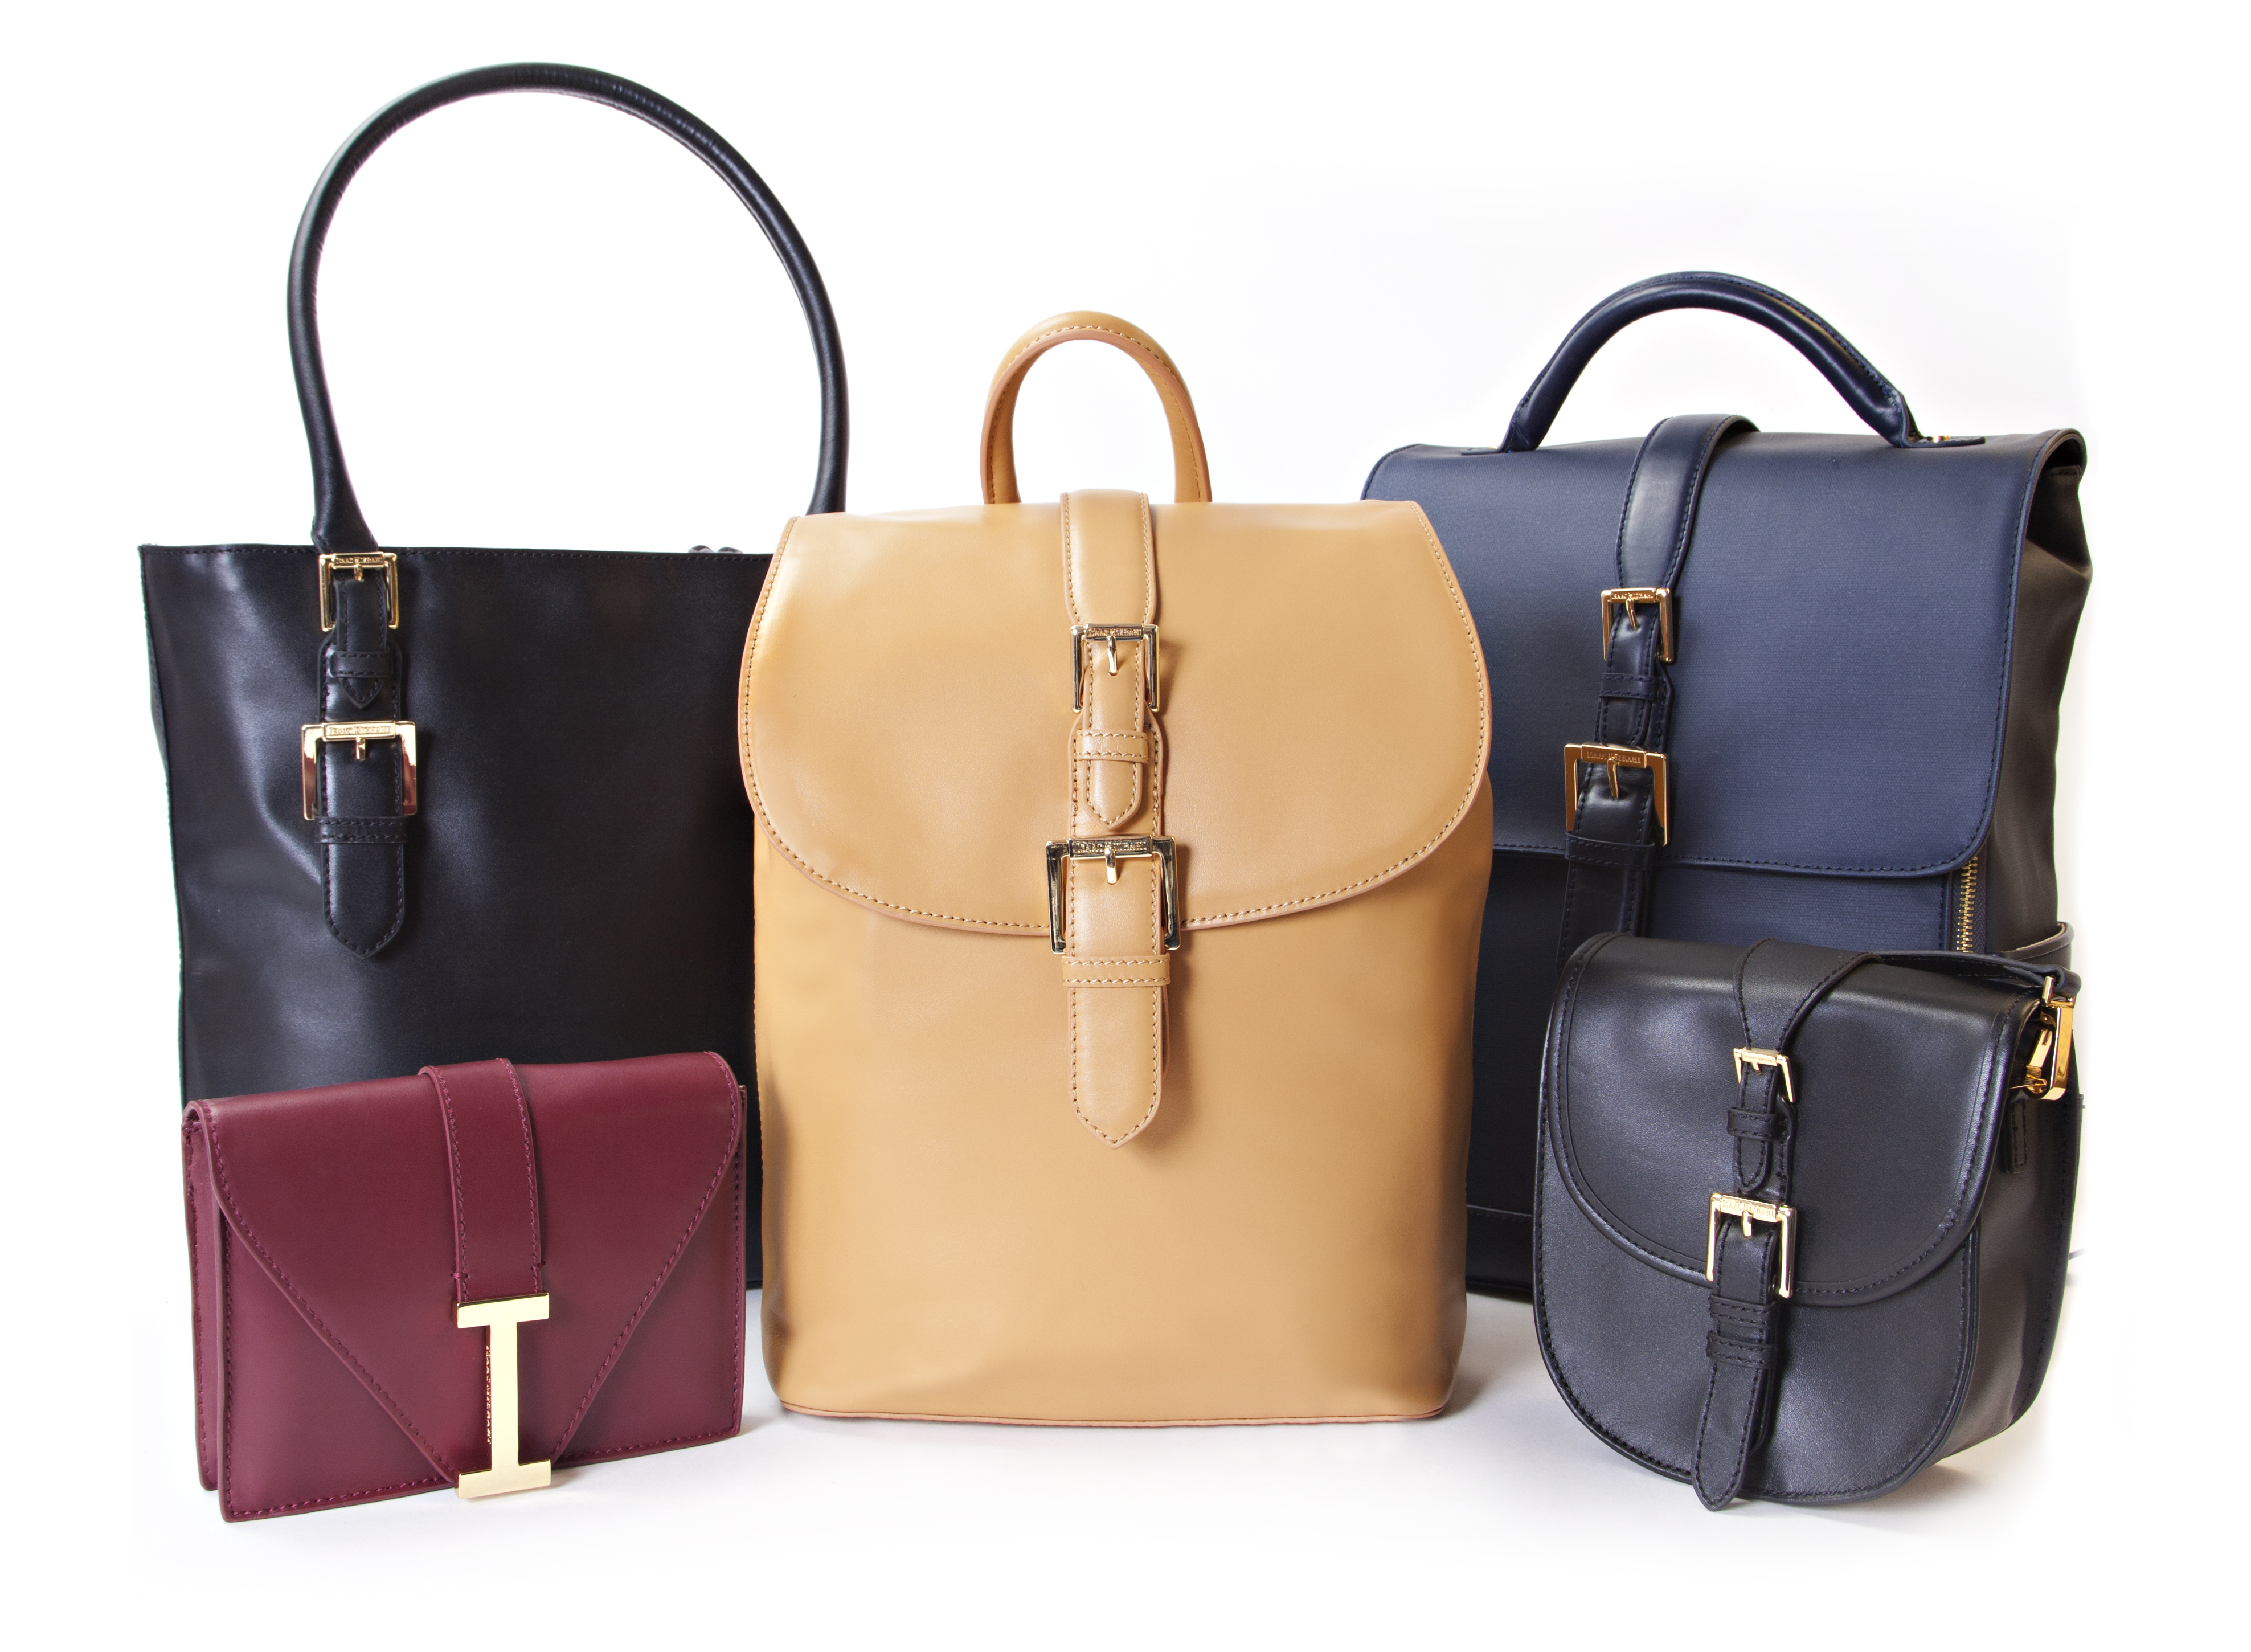 River Island Bags Fashionable Design | StylesWardrobe.com